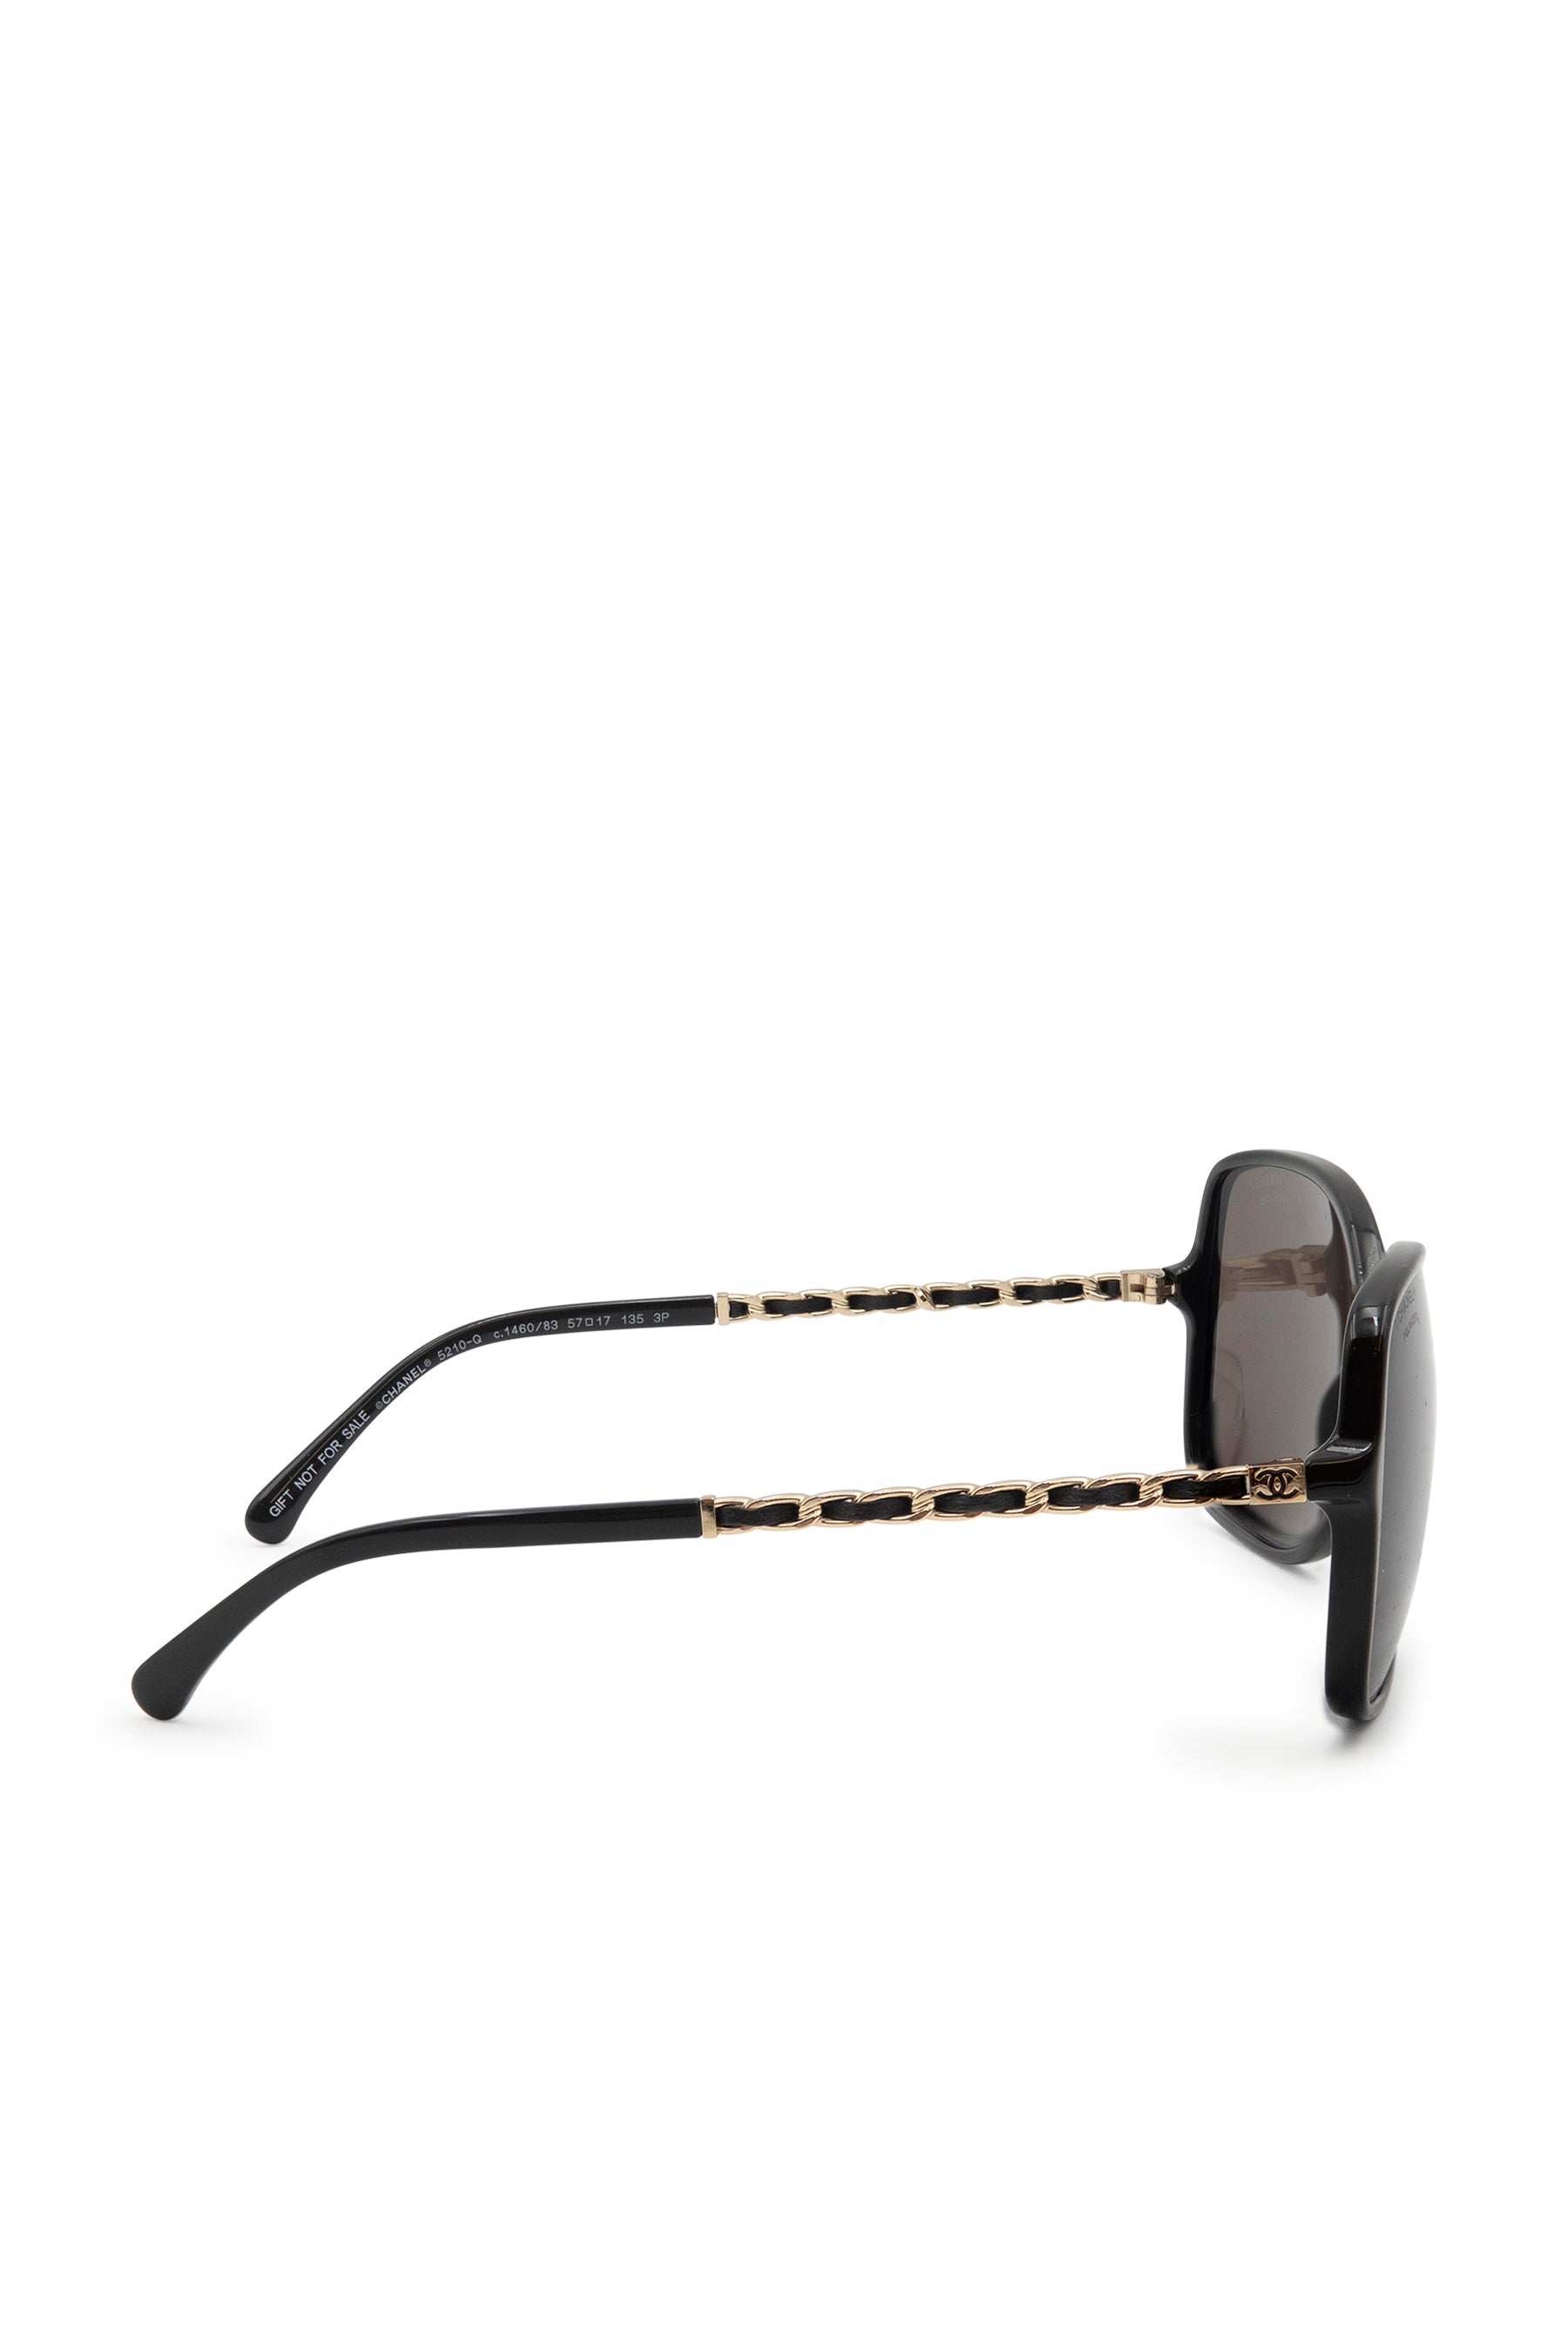 Chanel Interlocking CC Logo Square Sunglasses - Black Sunglasses